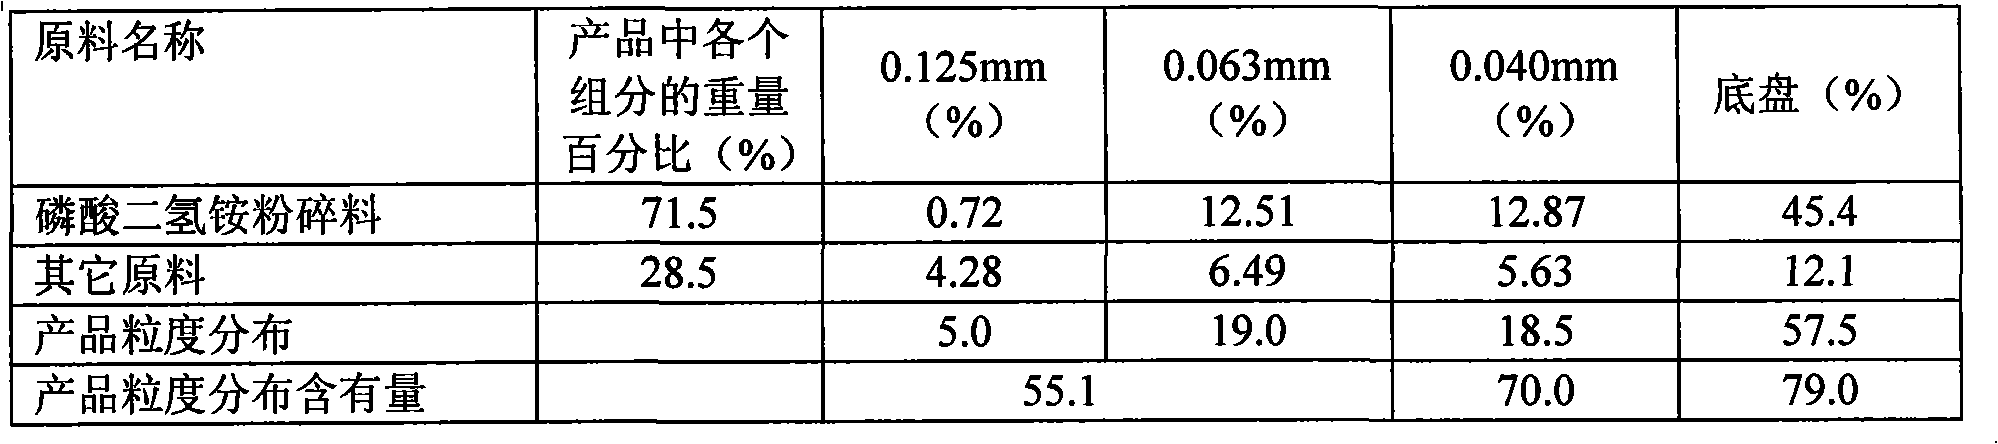 Control method of ABC dry powder grain size distribution content